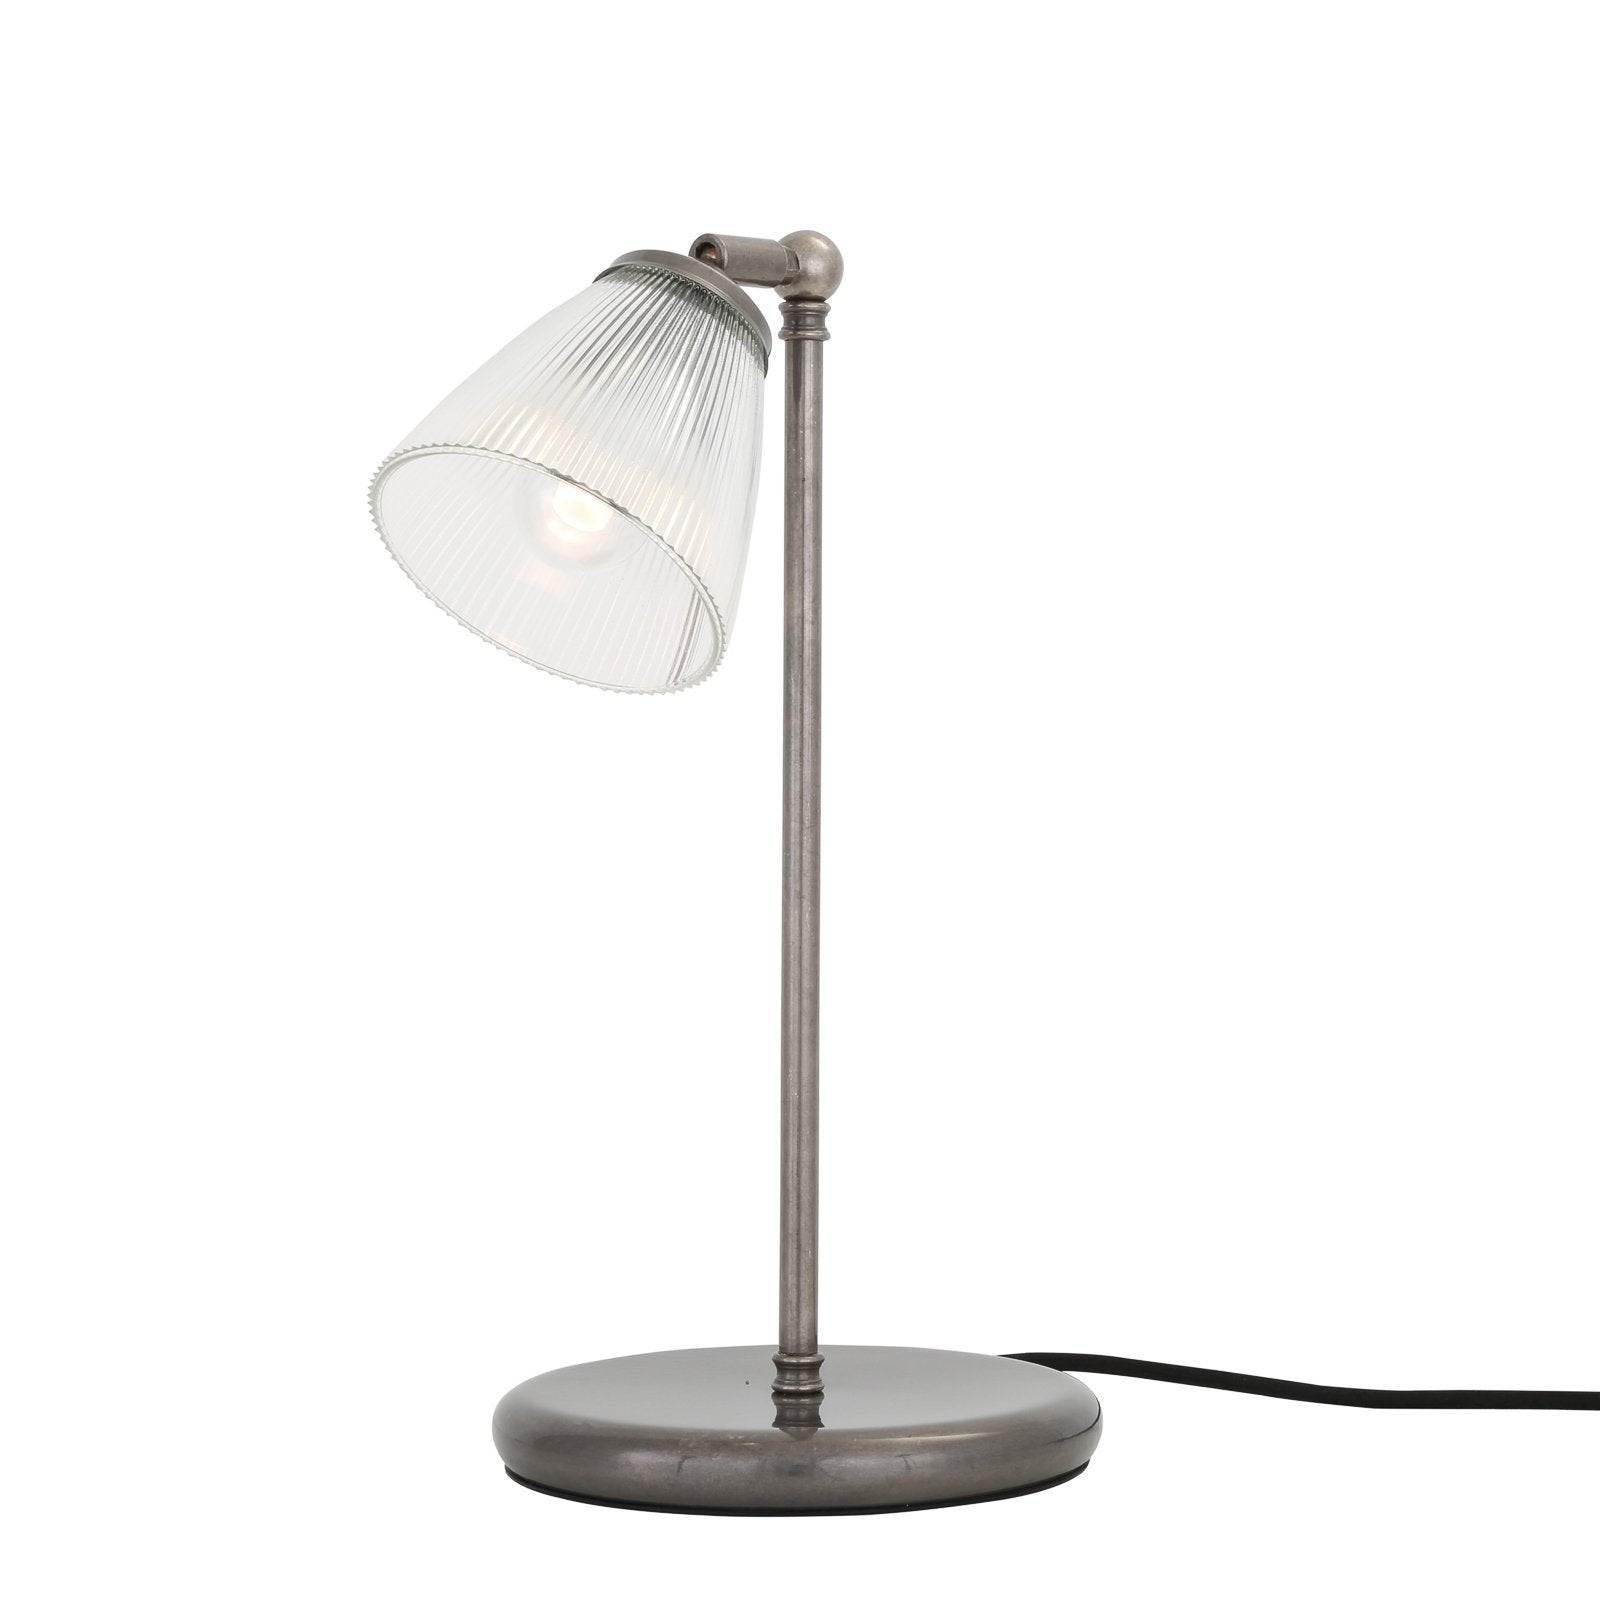 Gadar Table Lamp - Table Lamps from RETROLIGHT. Made by Mullan Lighting.